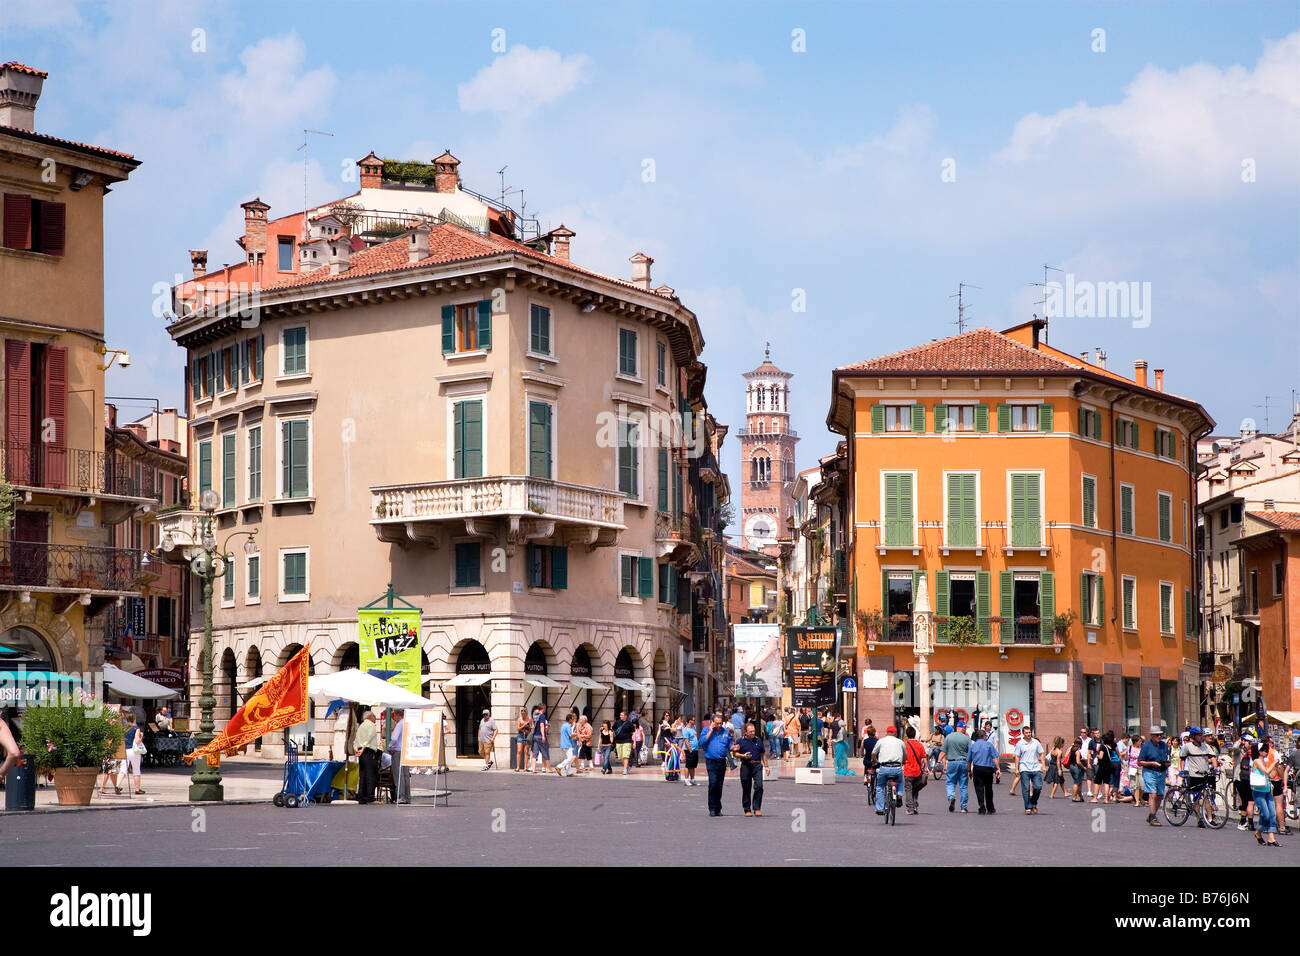 Piazza Bra, Via Mazzini, Verona, Veneto, Italy Stock Photo - Alamy